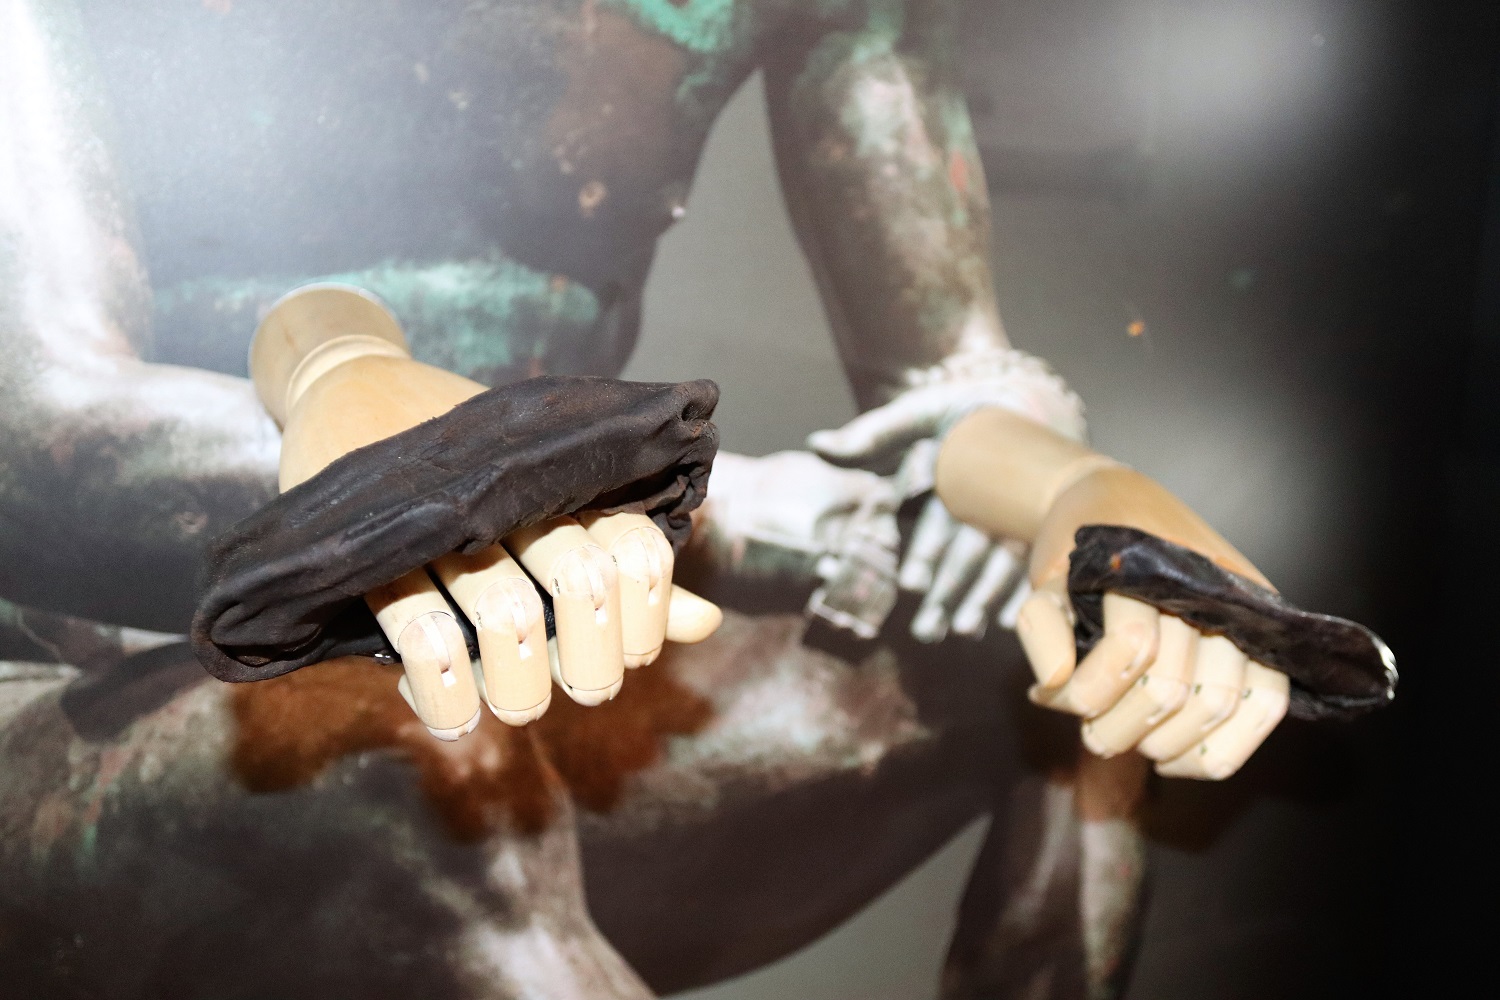 Roman boxing gloves